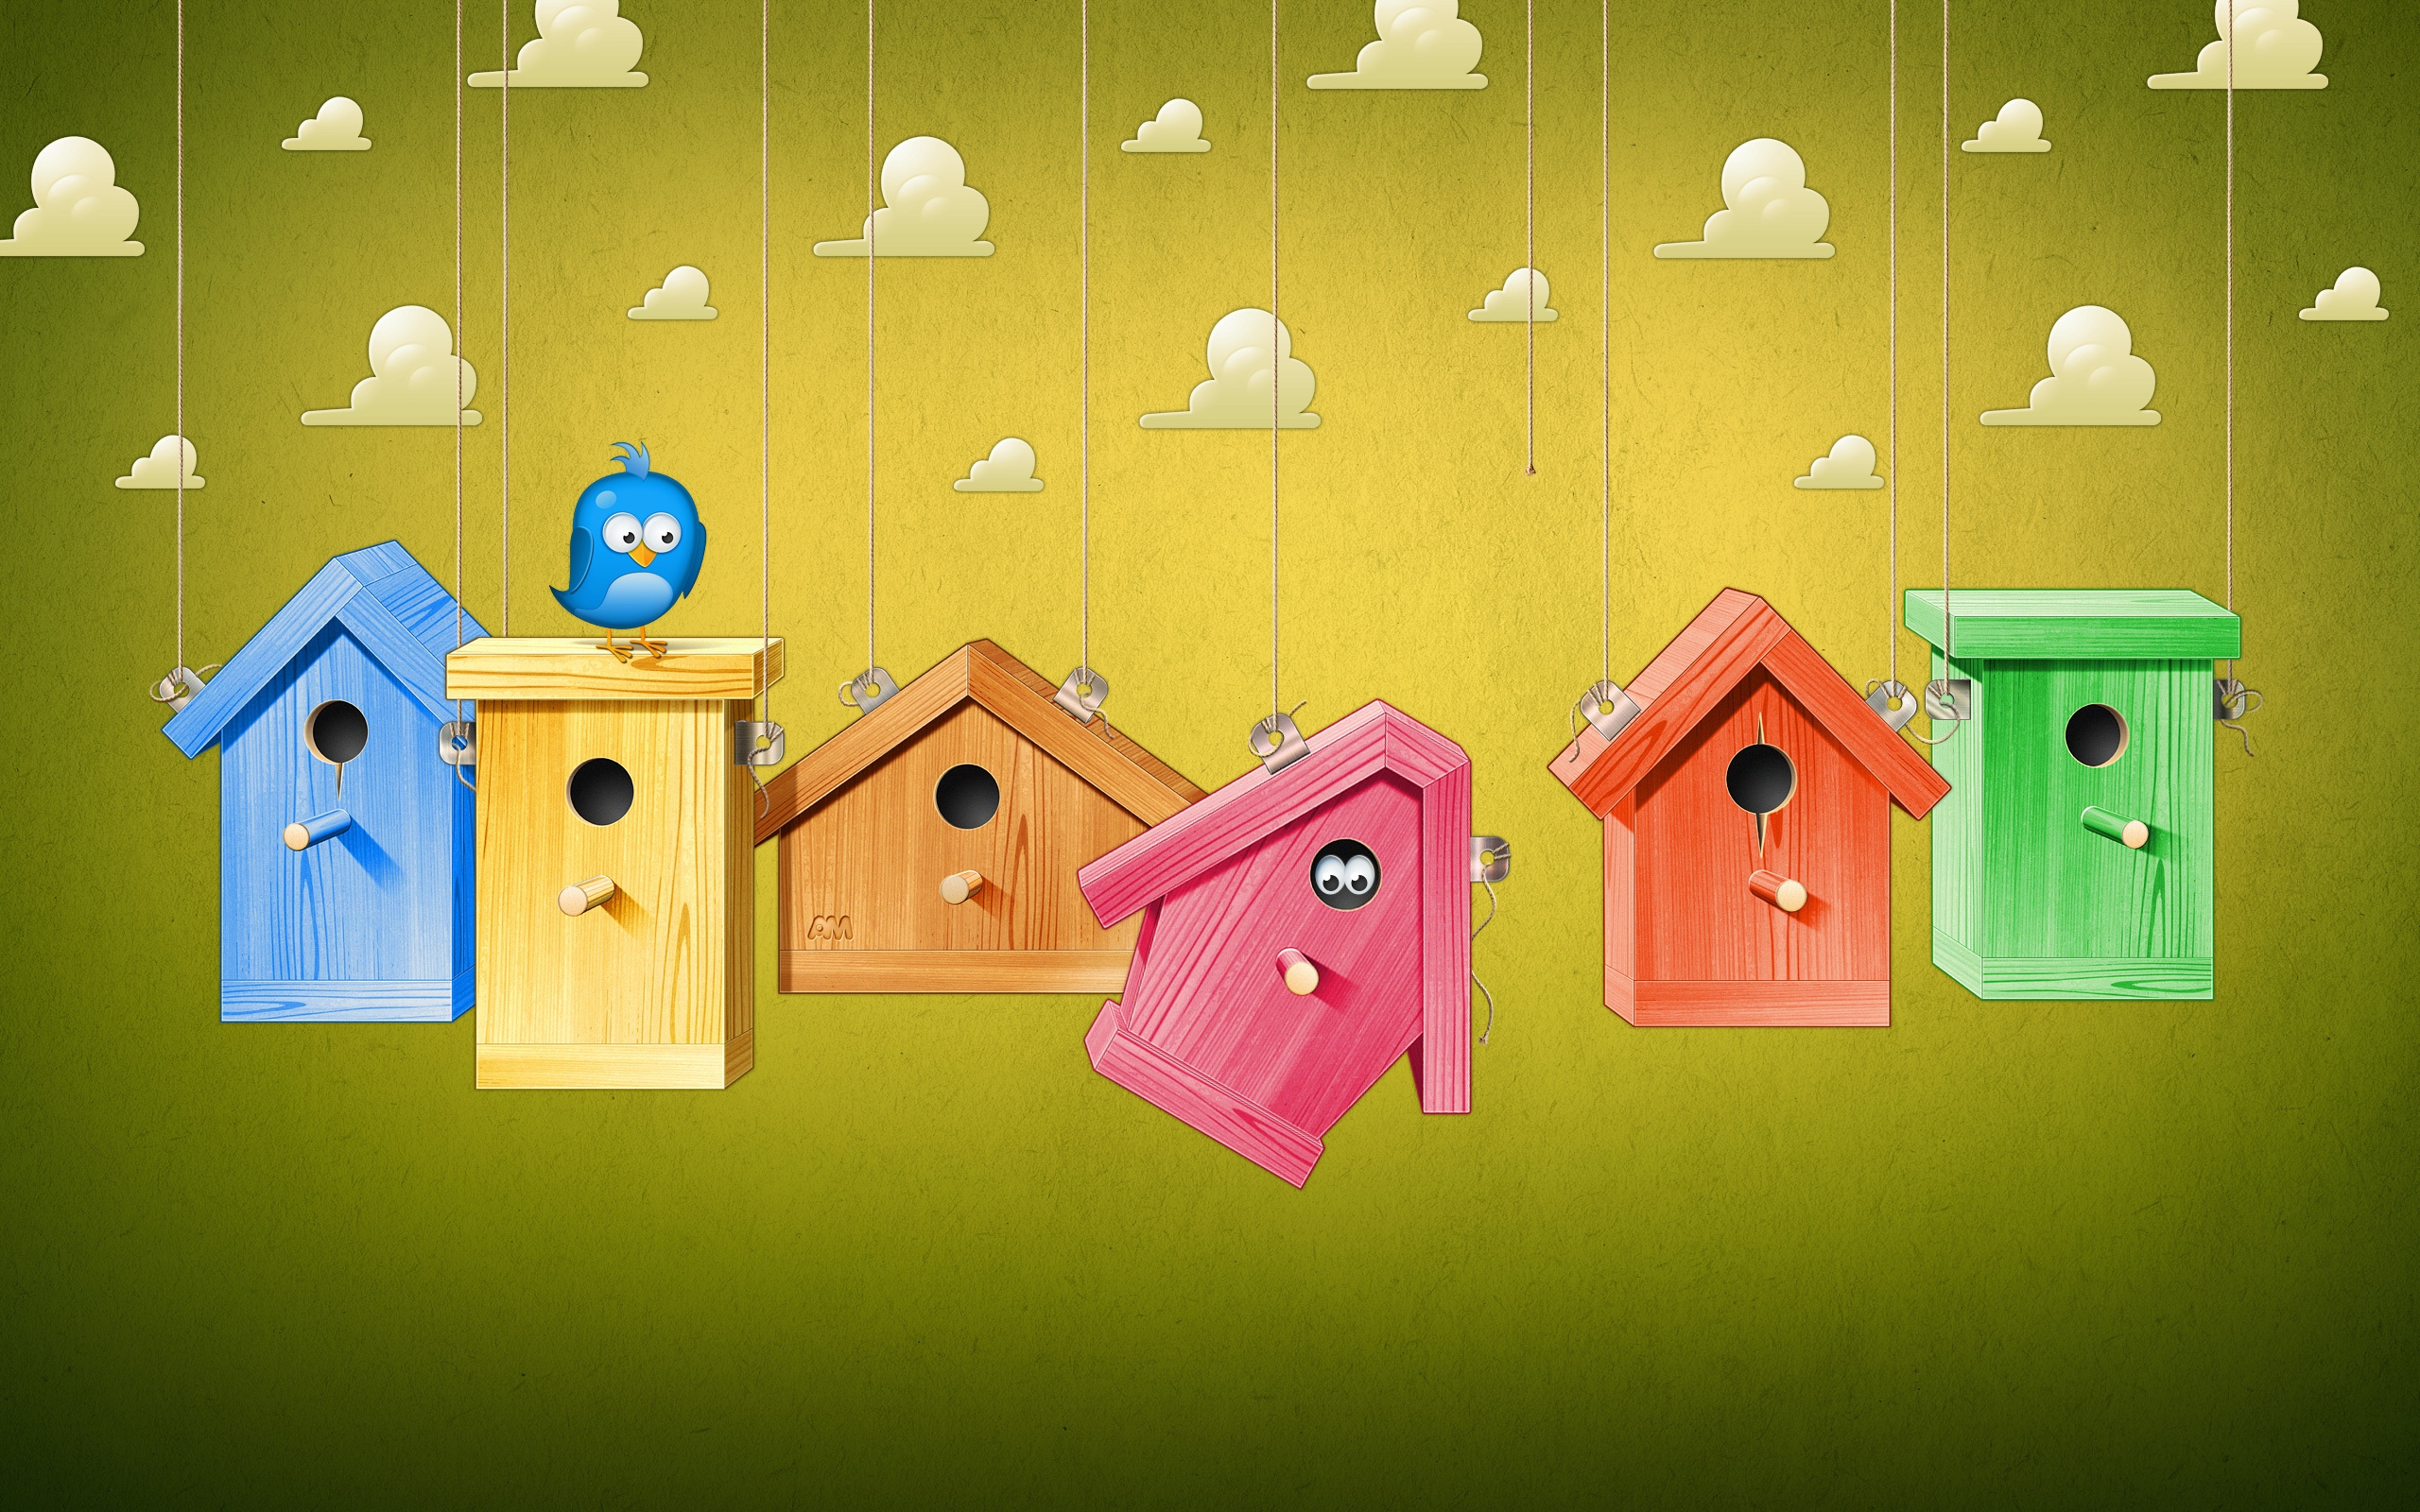 Cute Bird Houses for 2560 x 1600 widescreen resolution